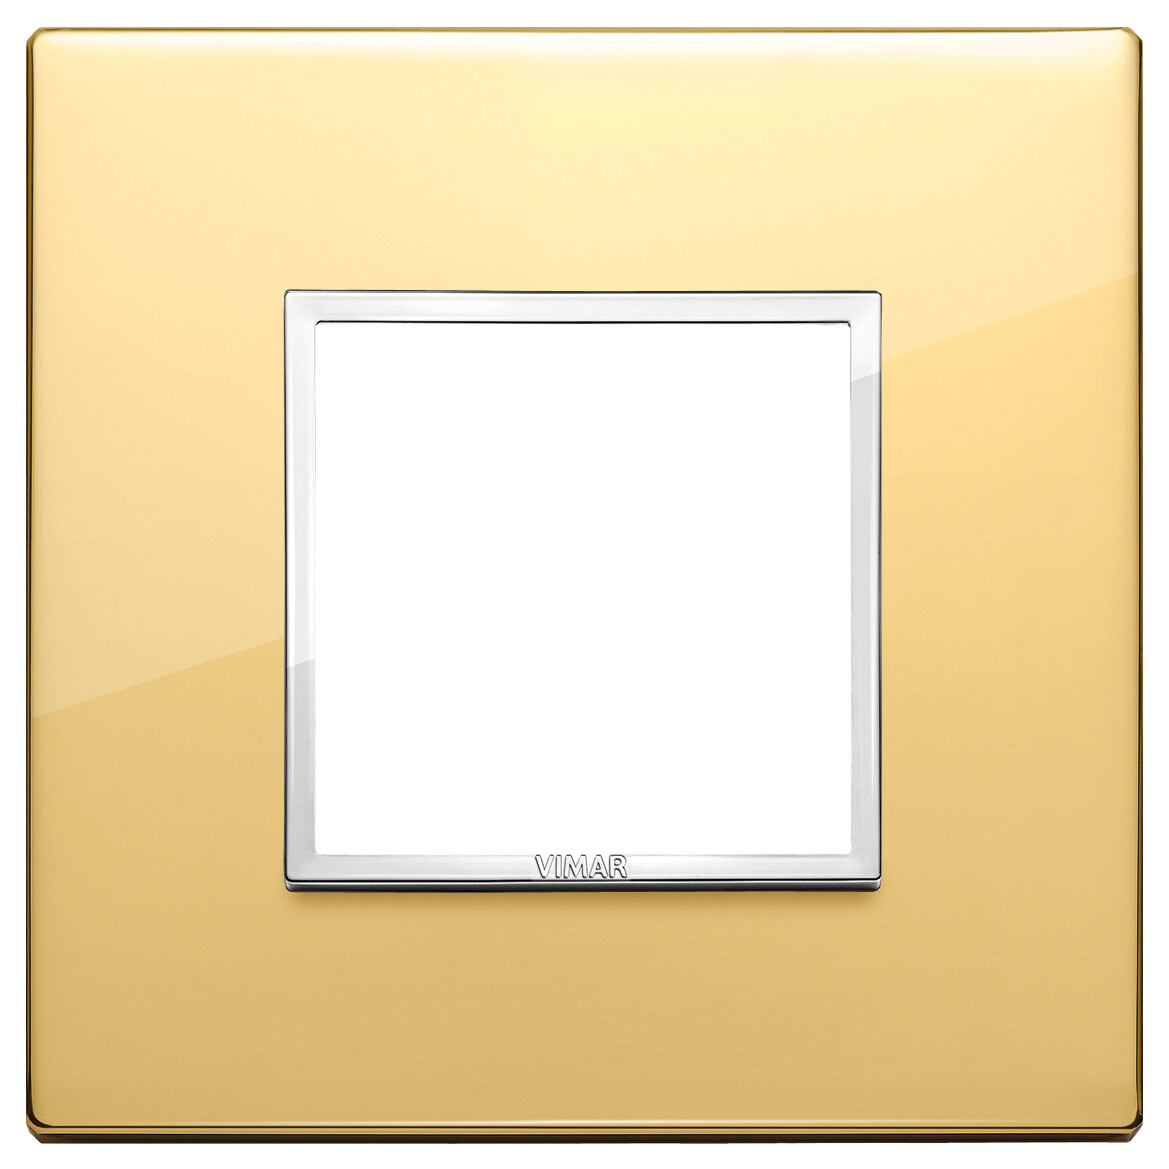 Накладка Evo на 2 модуля, глянцевое золото